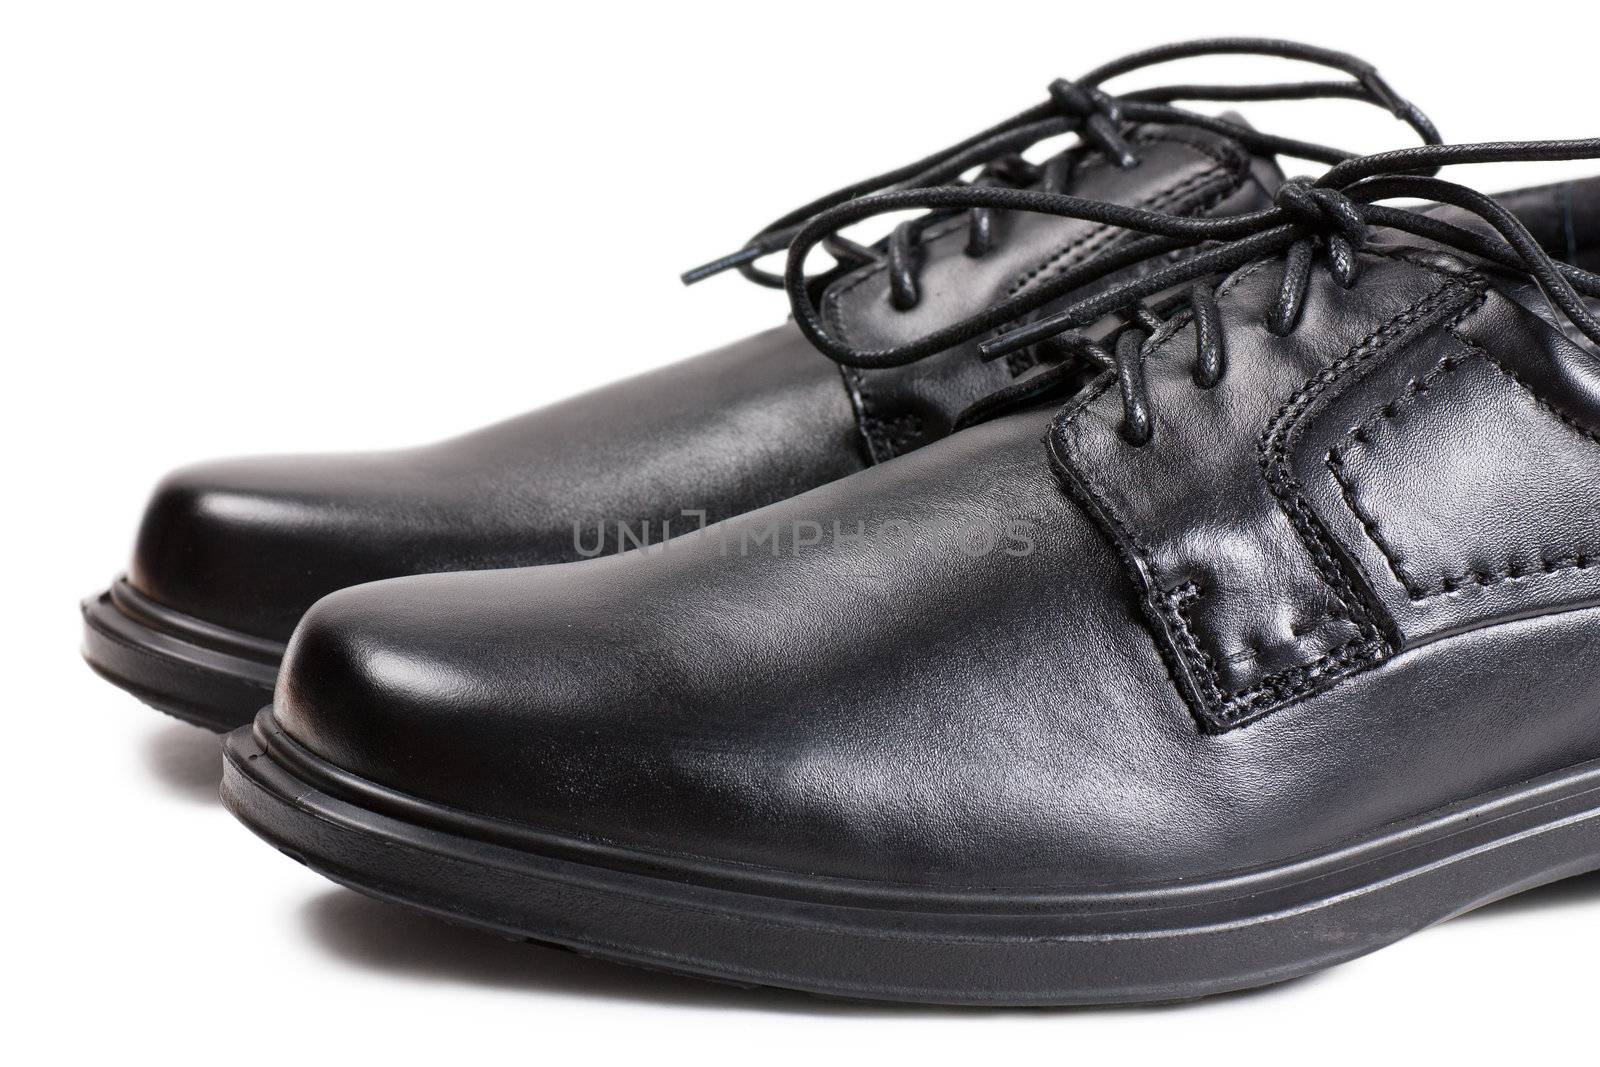 Macro view of men black shoes with black laces